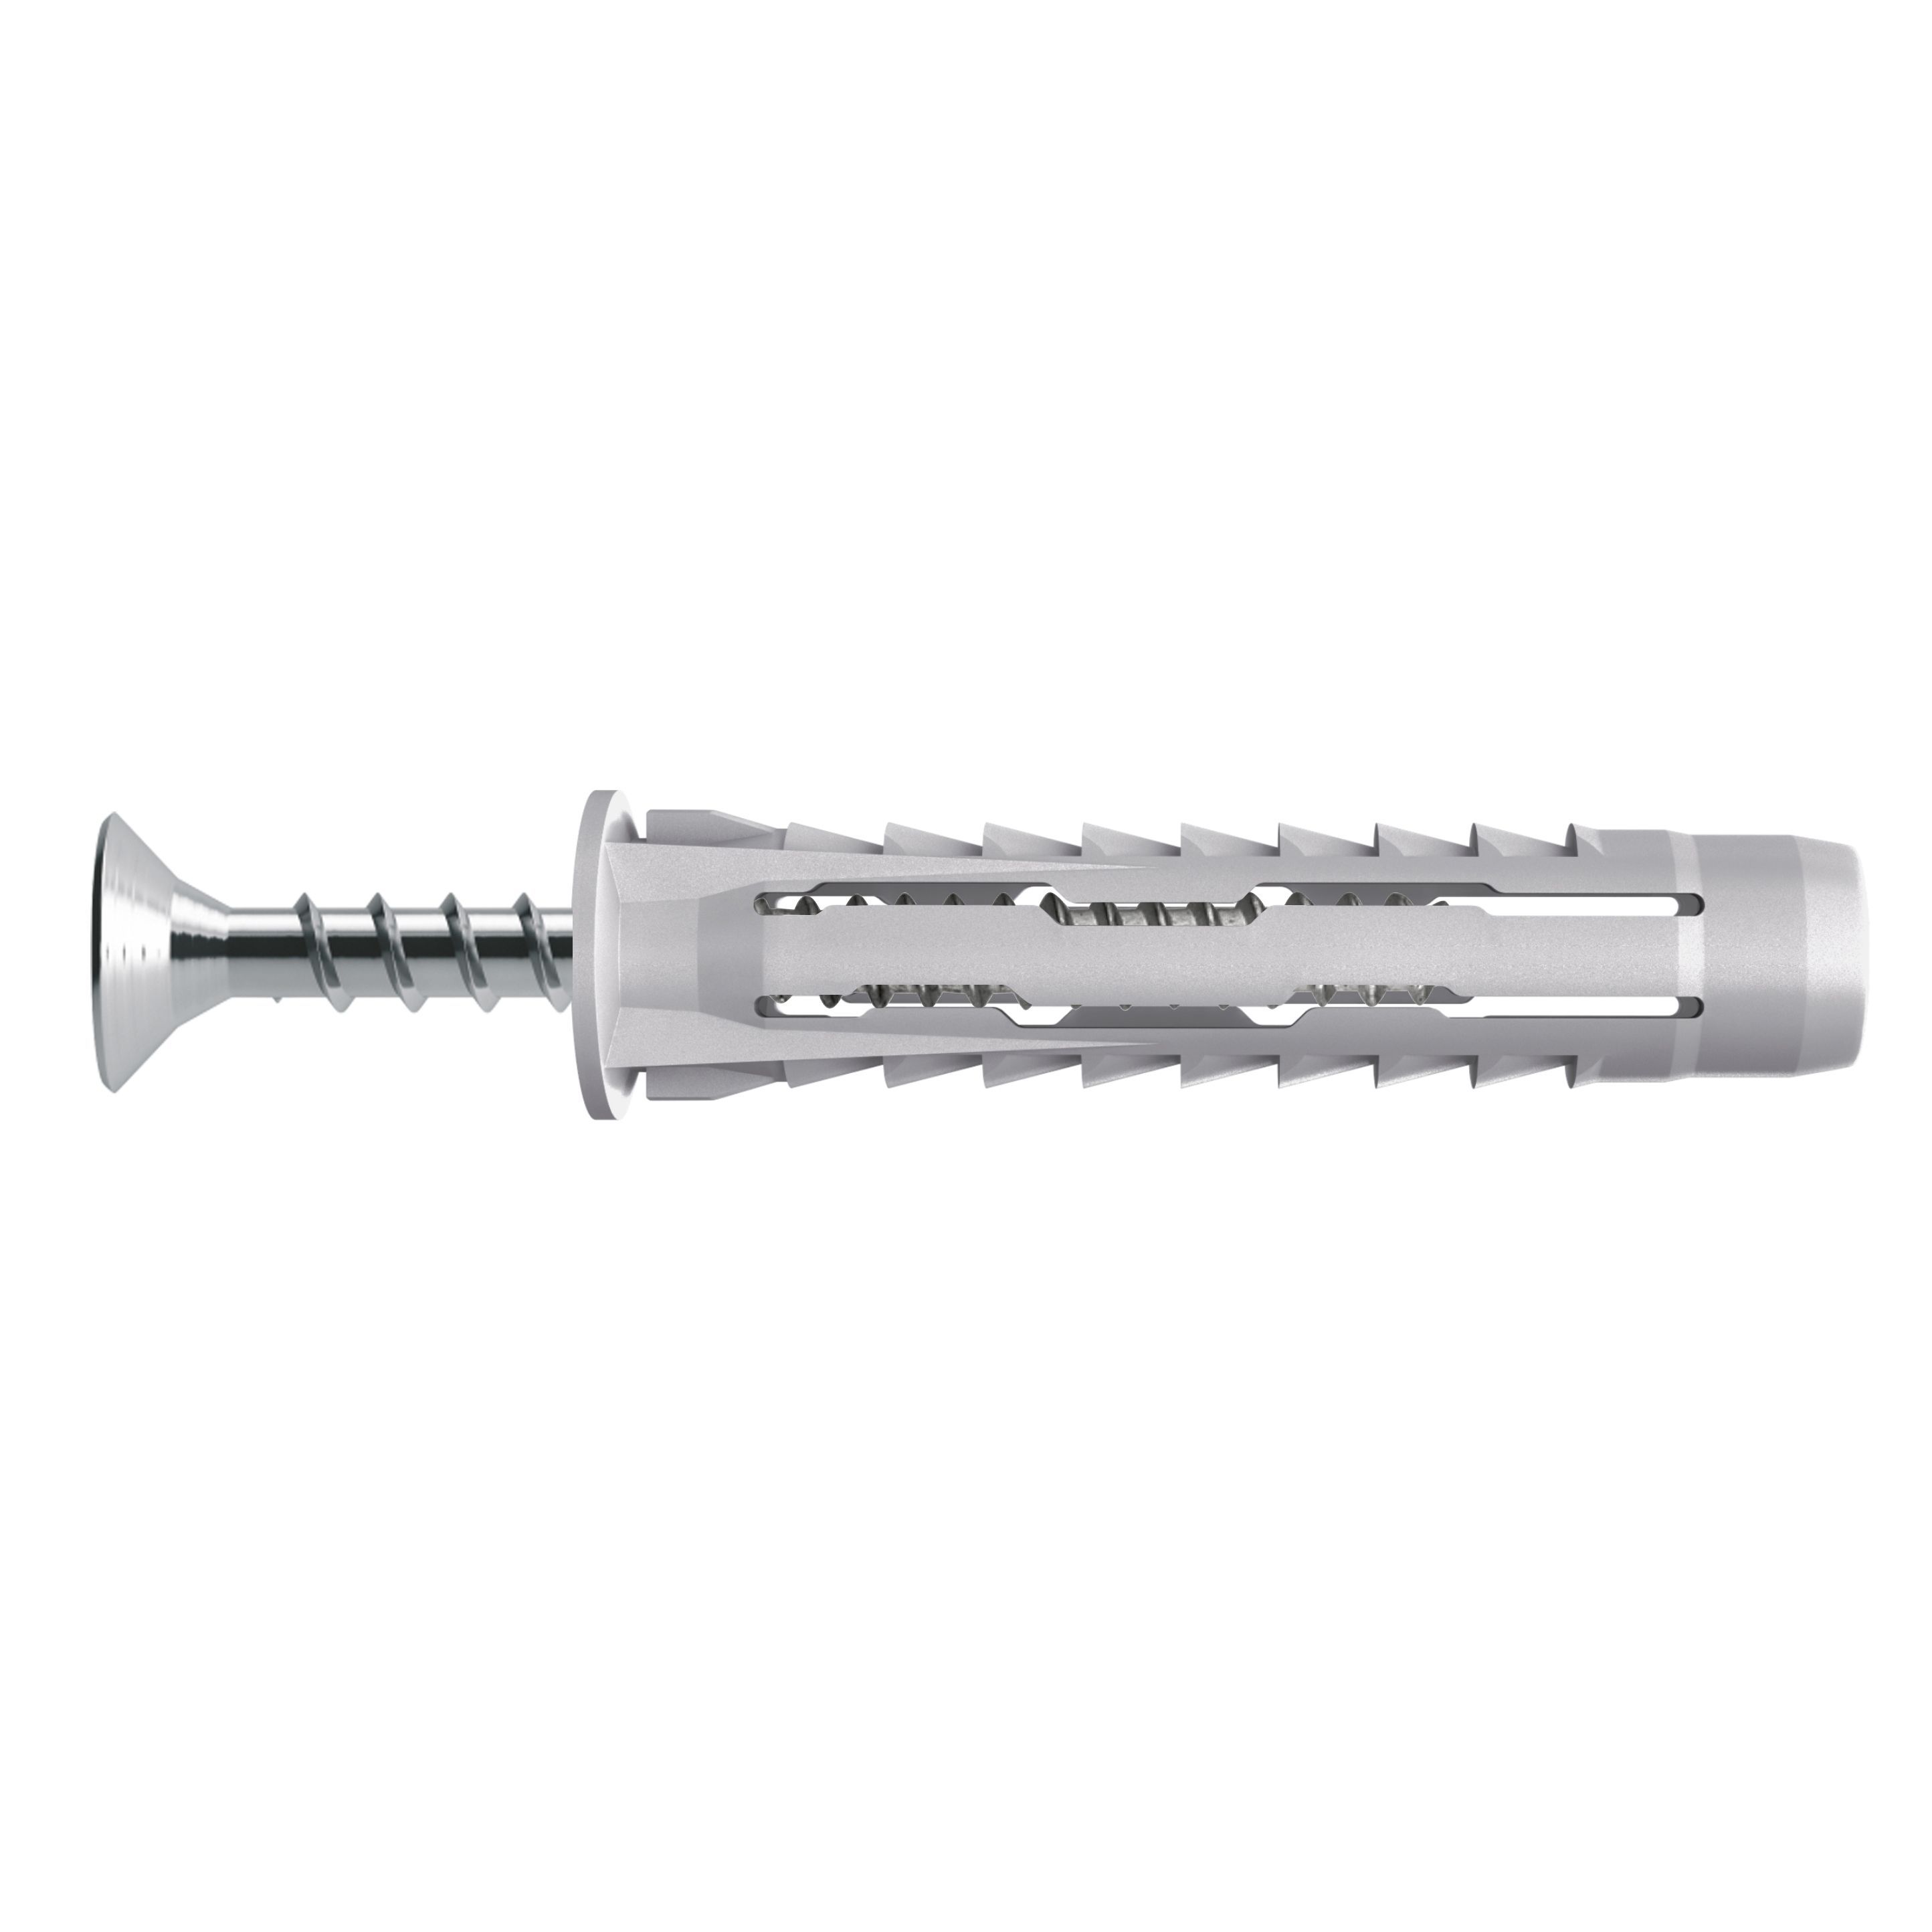 Diall Universal Grey Multi-purpose screw & wall plug (Dia)10mm (L)50mm, Pack of 5